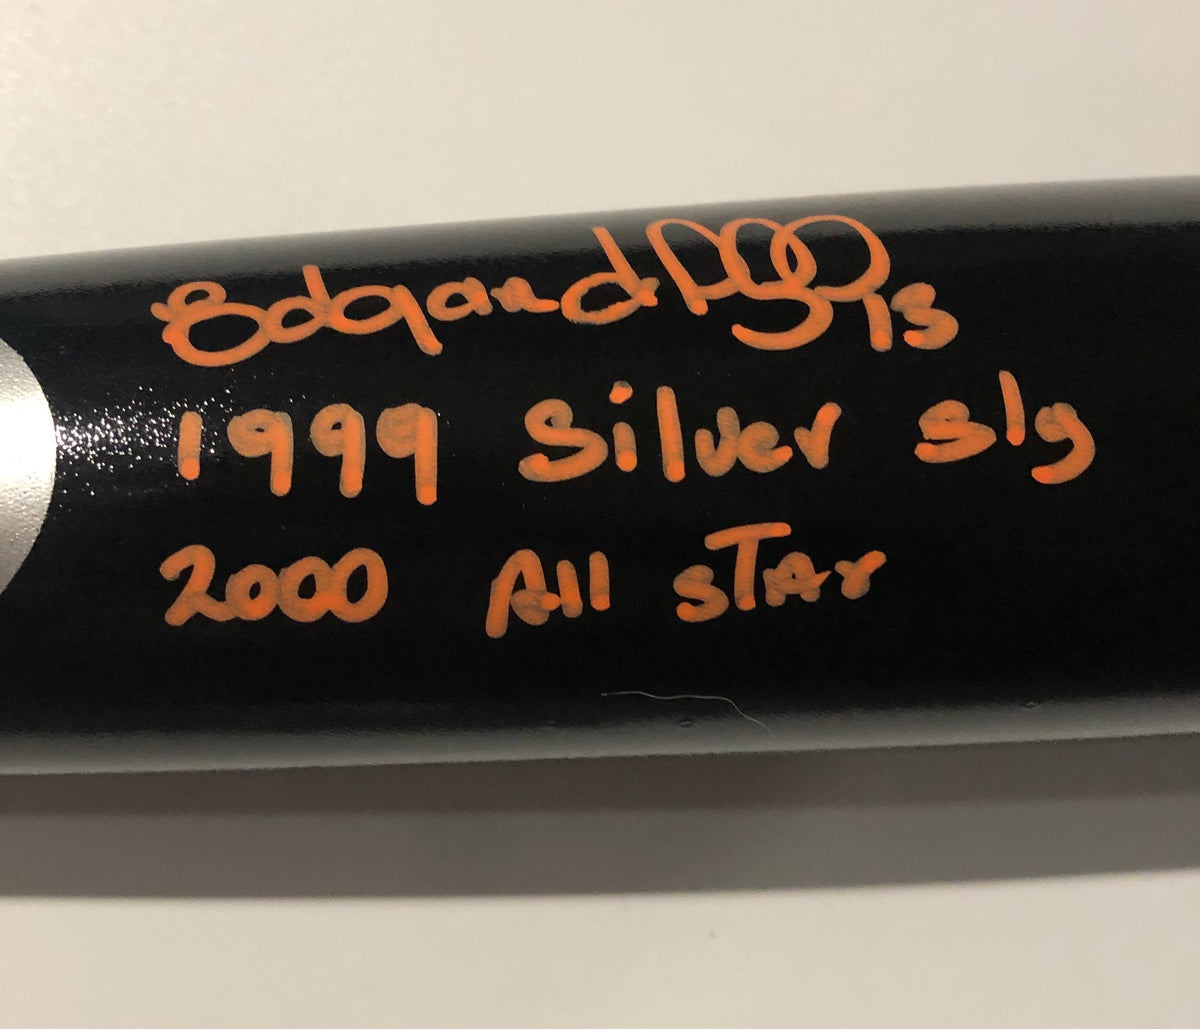 Kevin Pillar Autographed Black Rawlings Pro Model Bat w/ Quote Inscription  (JSA)